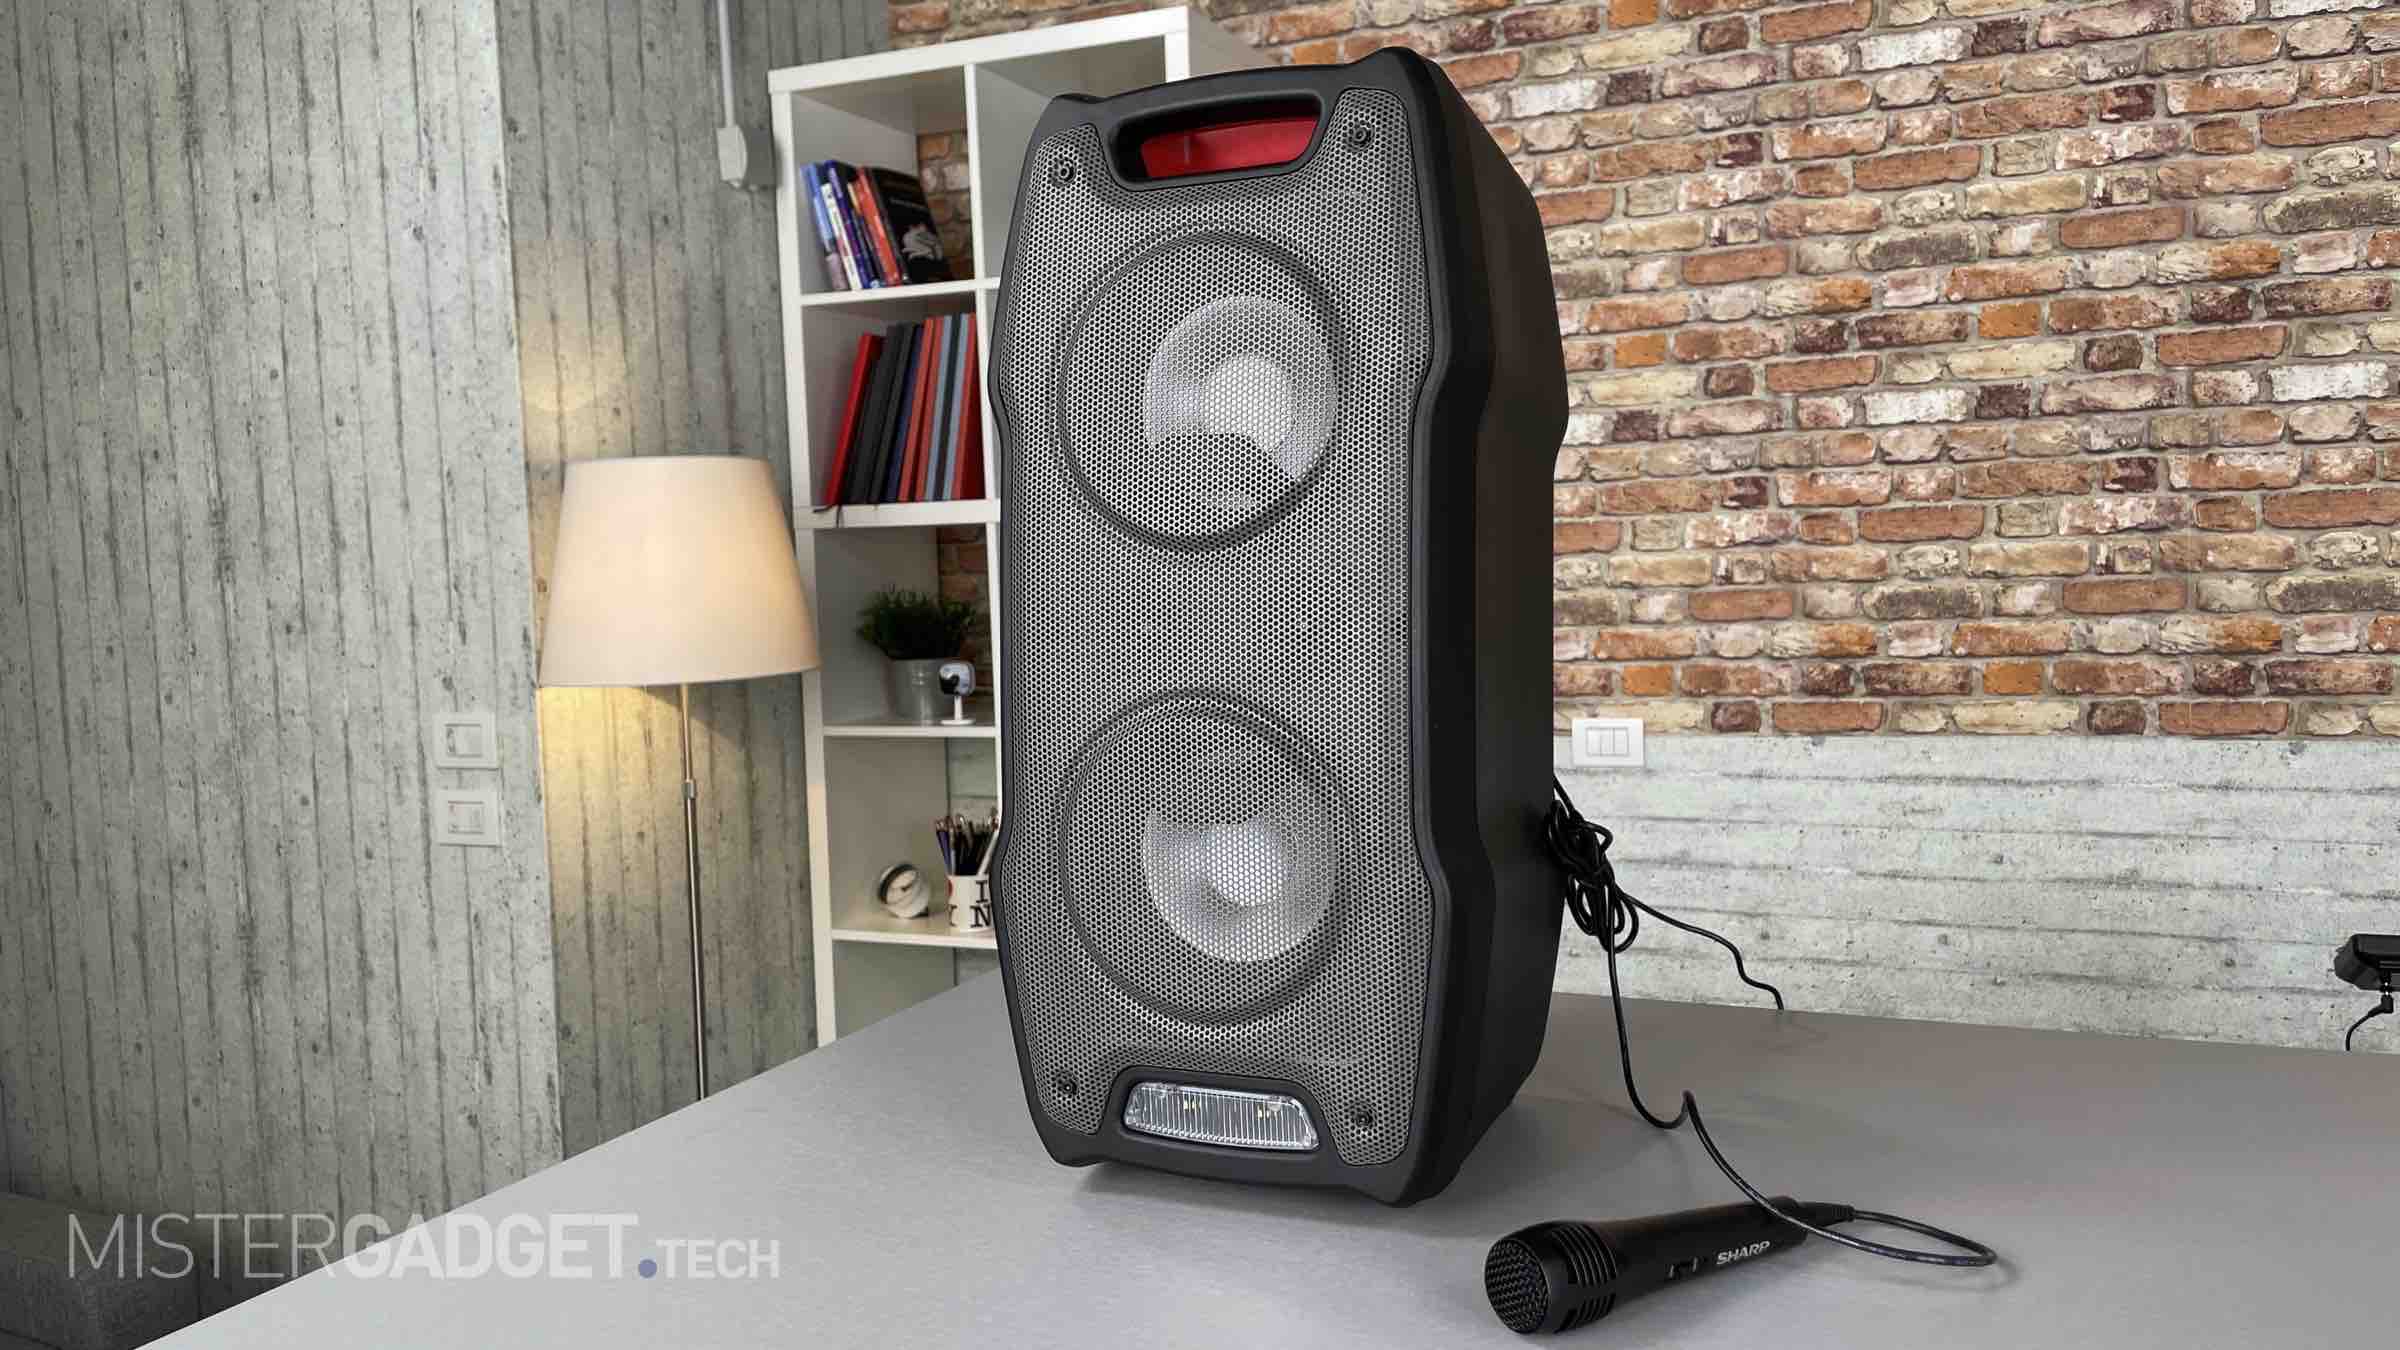 Recensione Sharp Party Speaker System